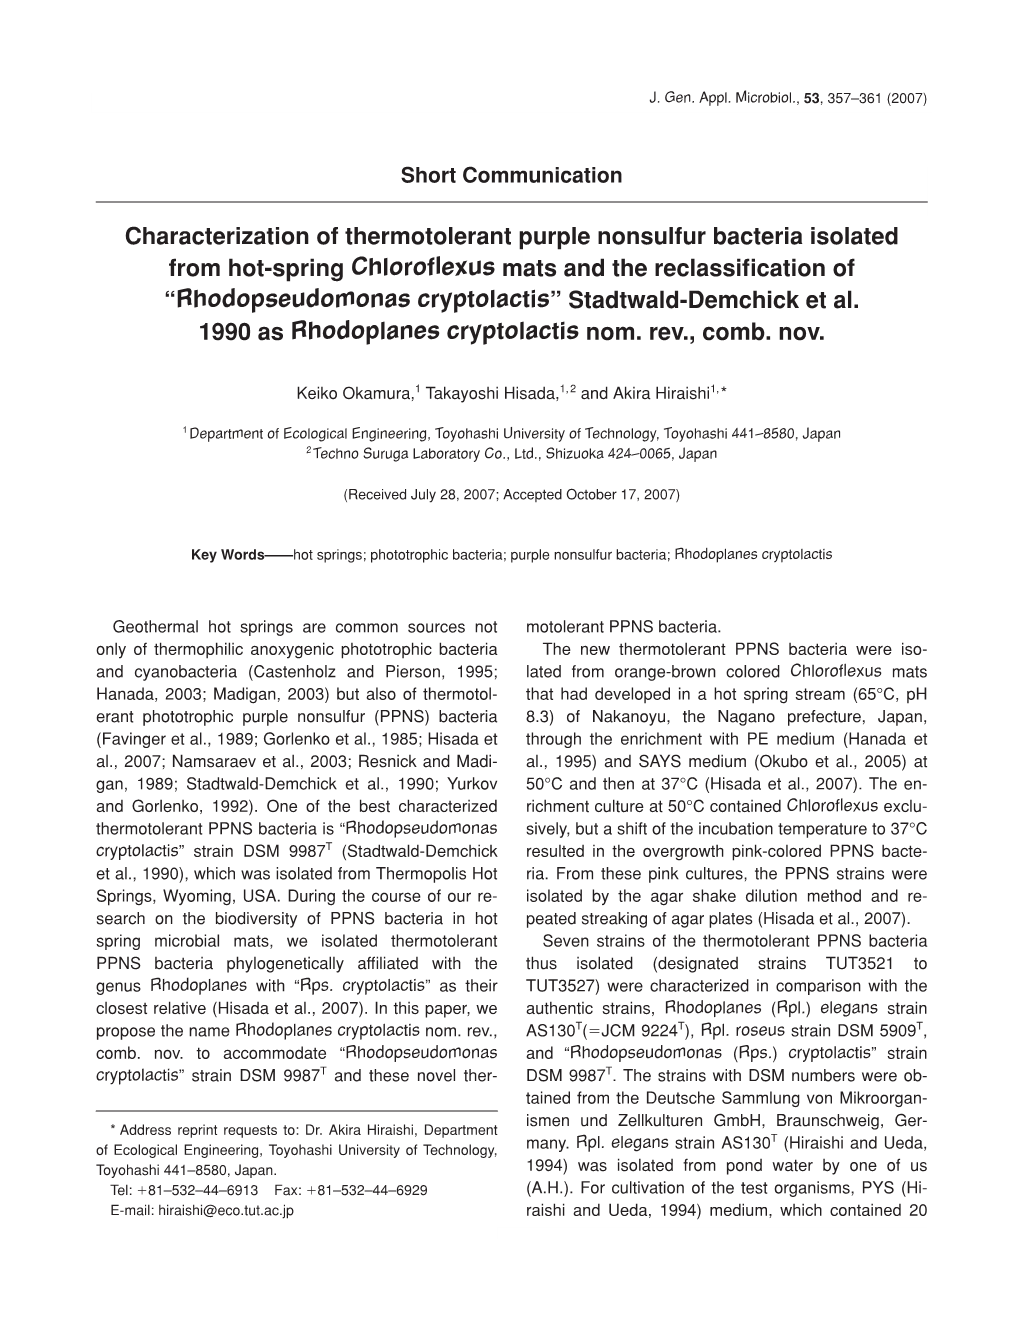 Characterization of Thermotolerant Purple Nonsulfur Bacteria Isolated